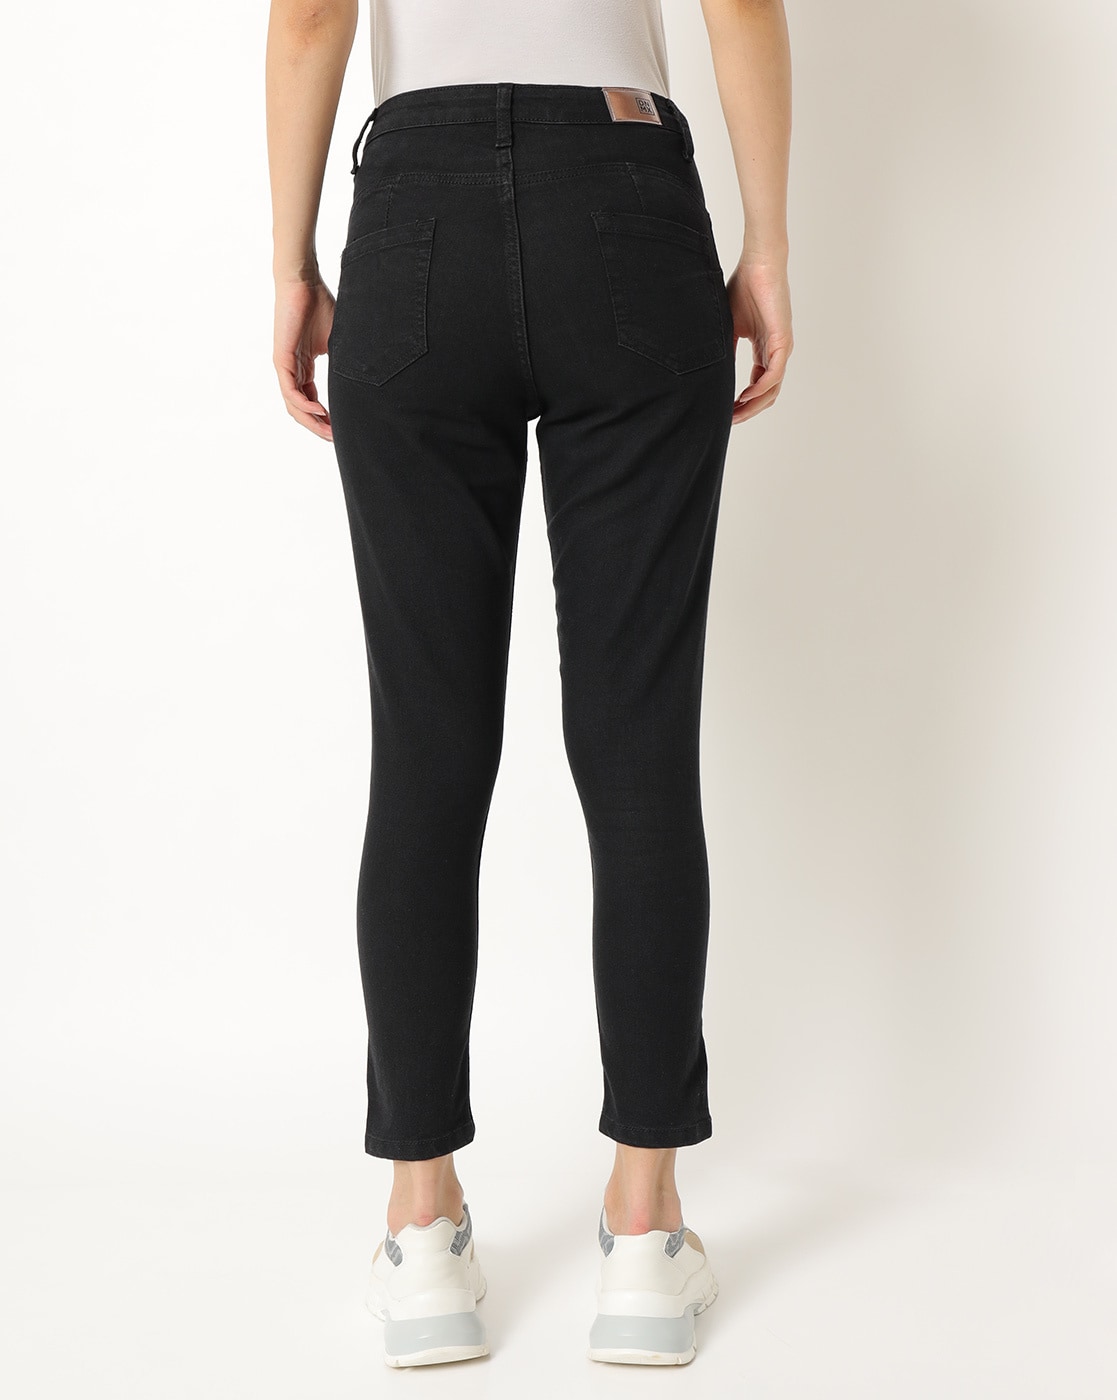 Buy Black Jeans & Jeggings for Women by DNMX Online